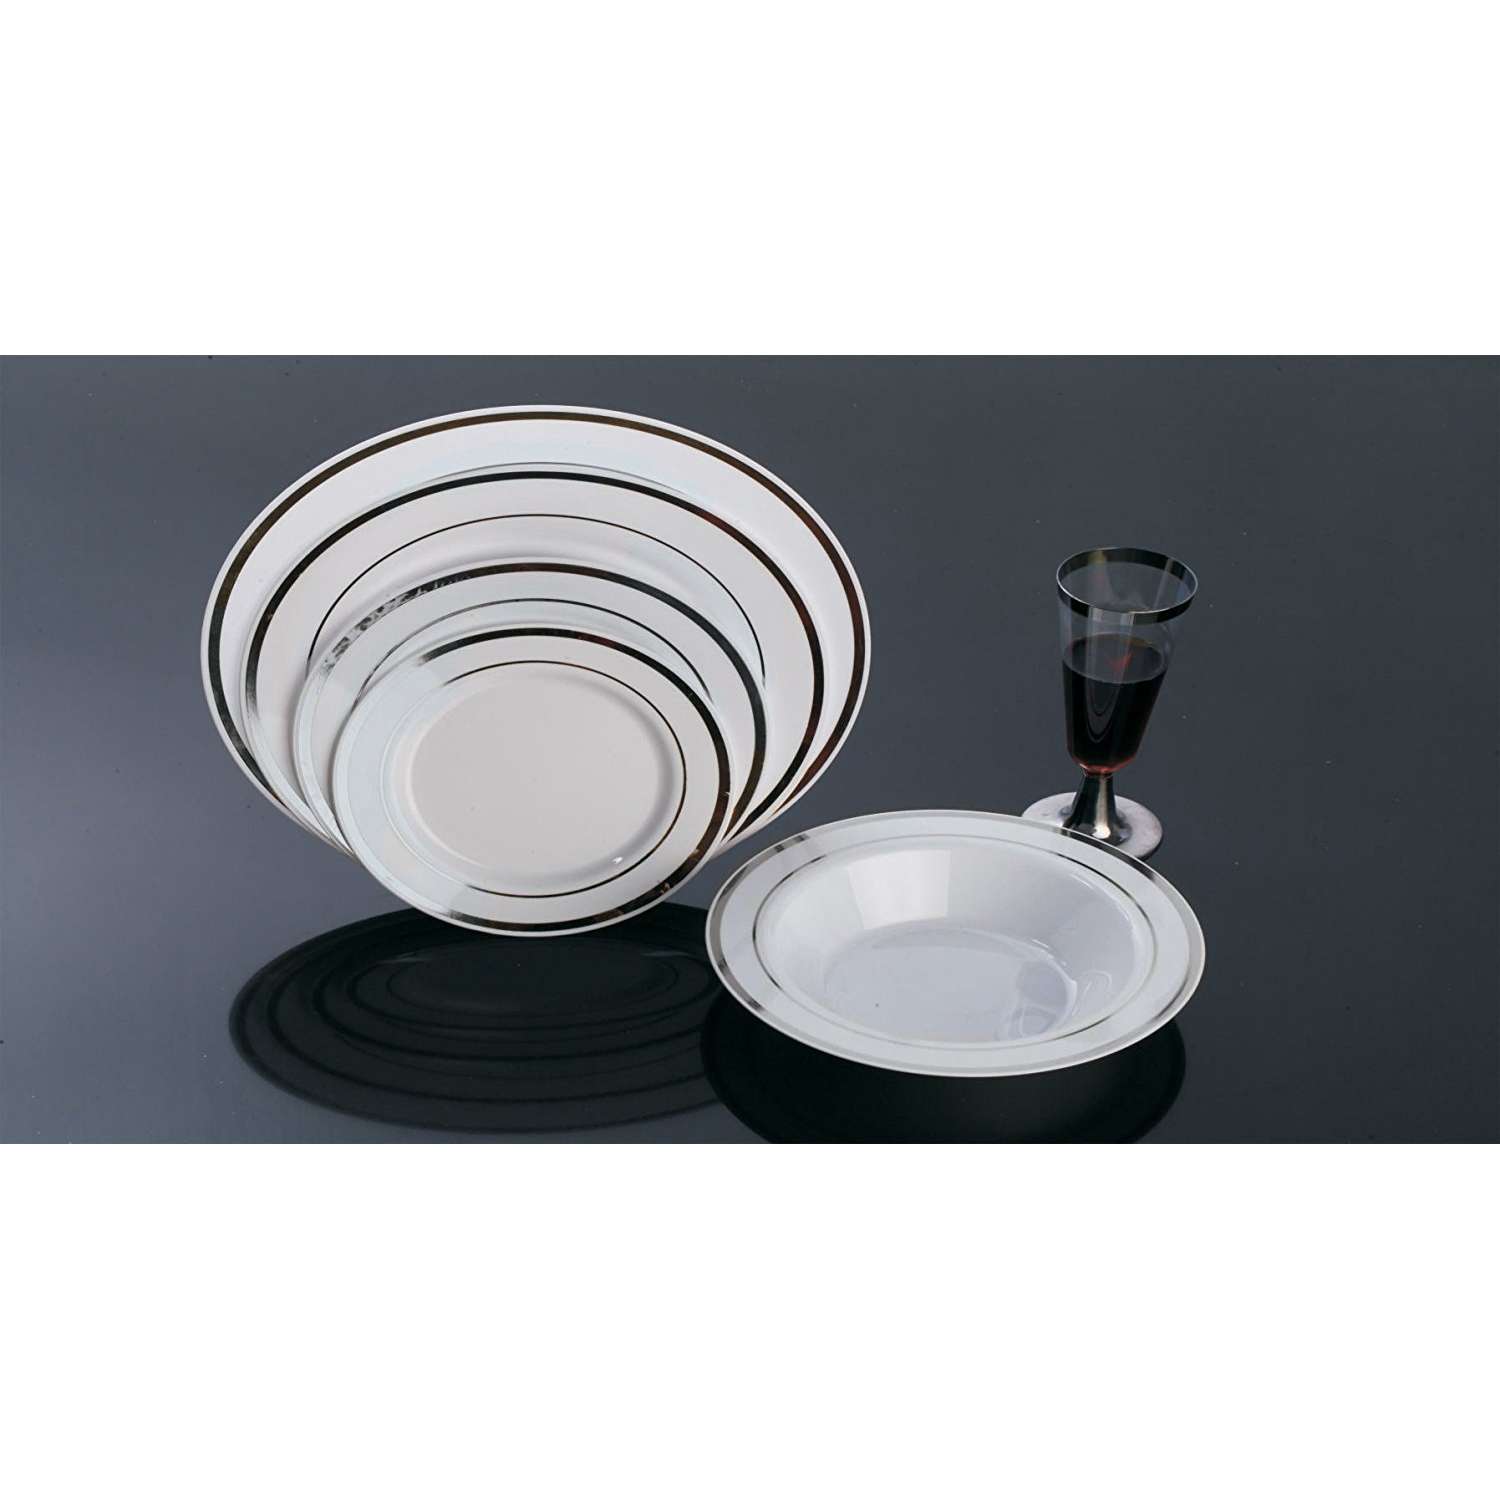 50-piece Set Round White Plates with Silver Rim, 20 Pieces 7.5", 15 Pieces 9", 15 Pieces 10.25", 4/Case - 2